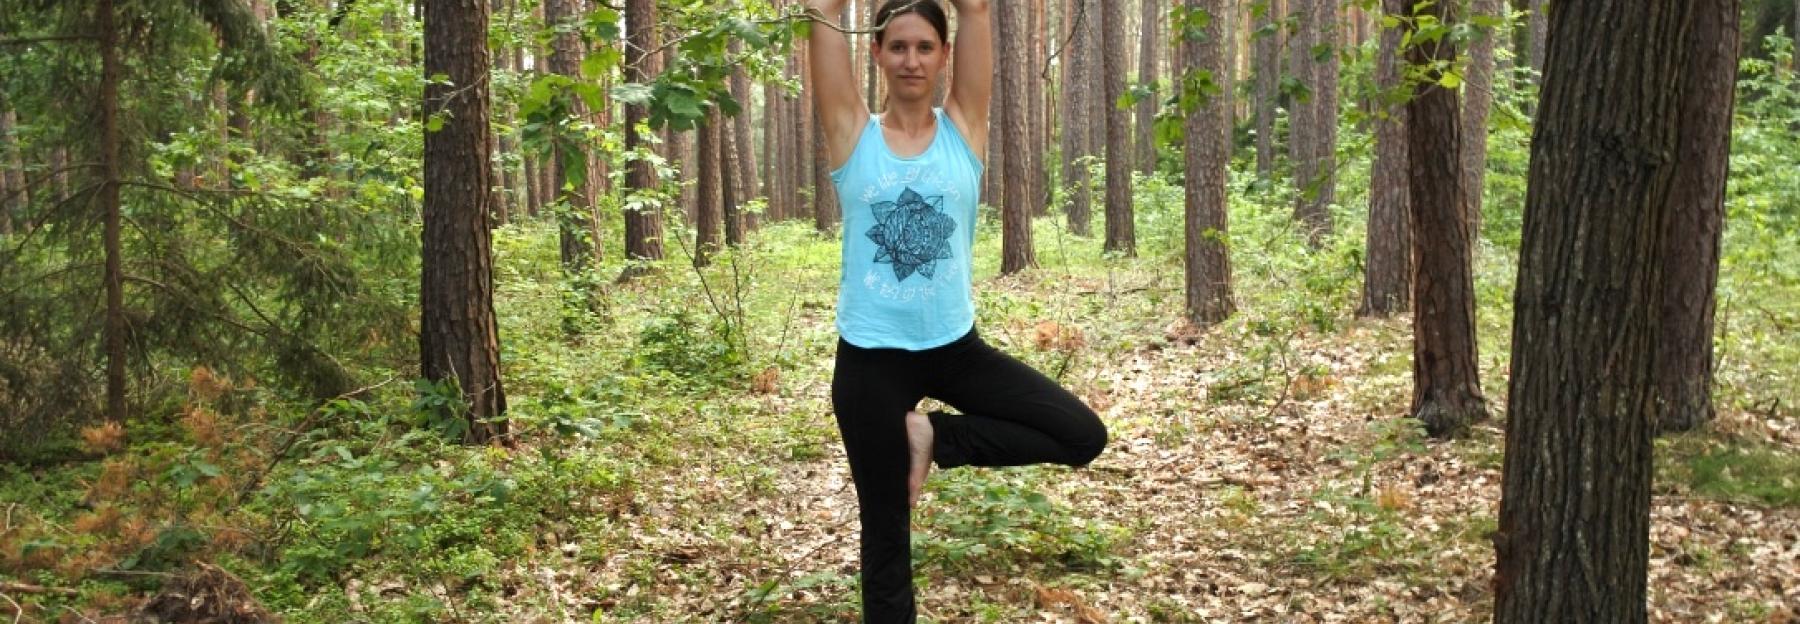 Yoga im Wald, Energietankstelle Wald-Ruhe